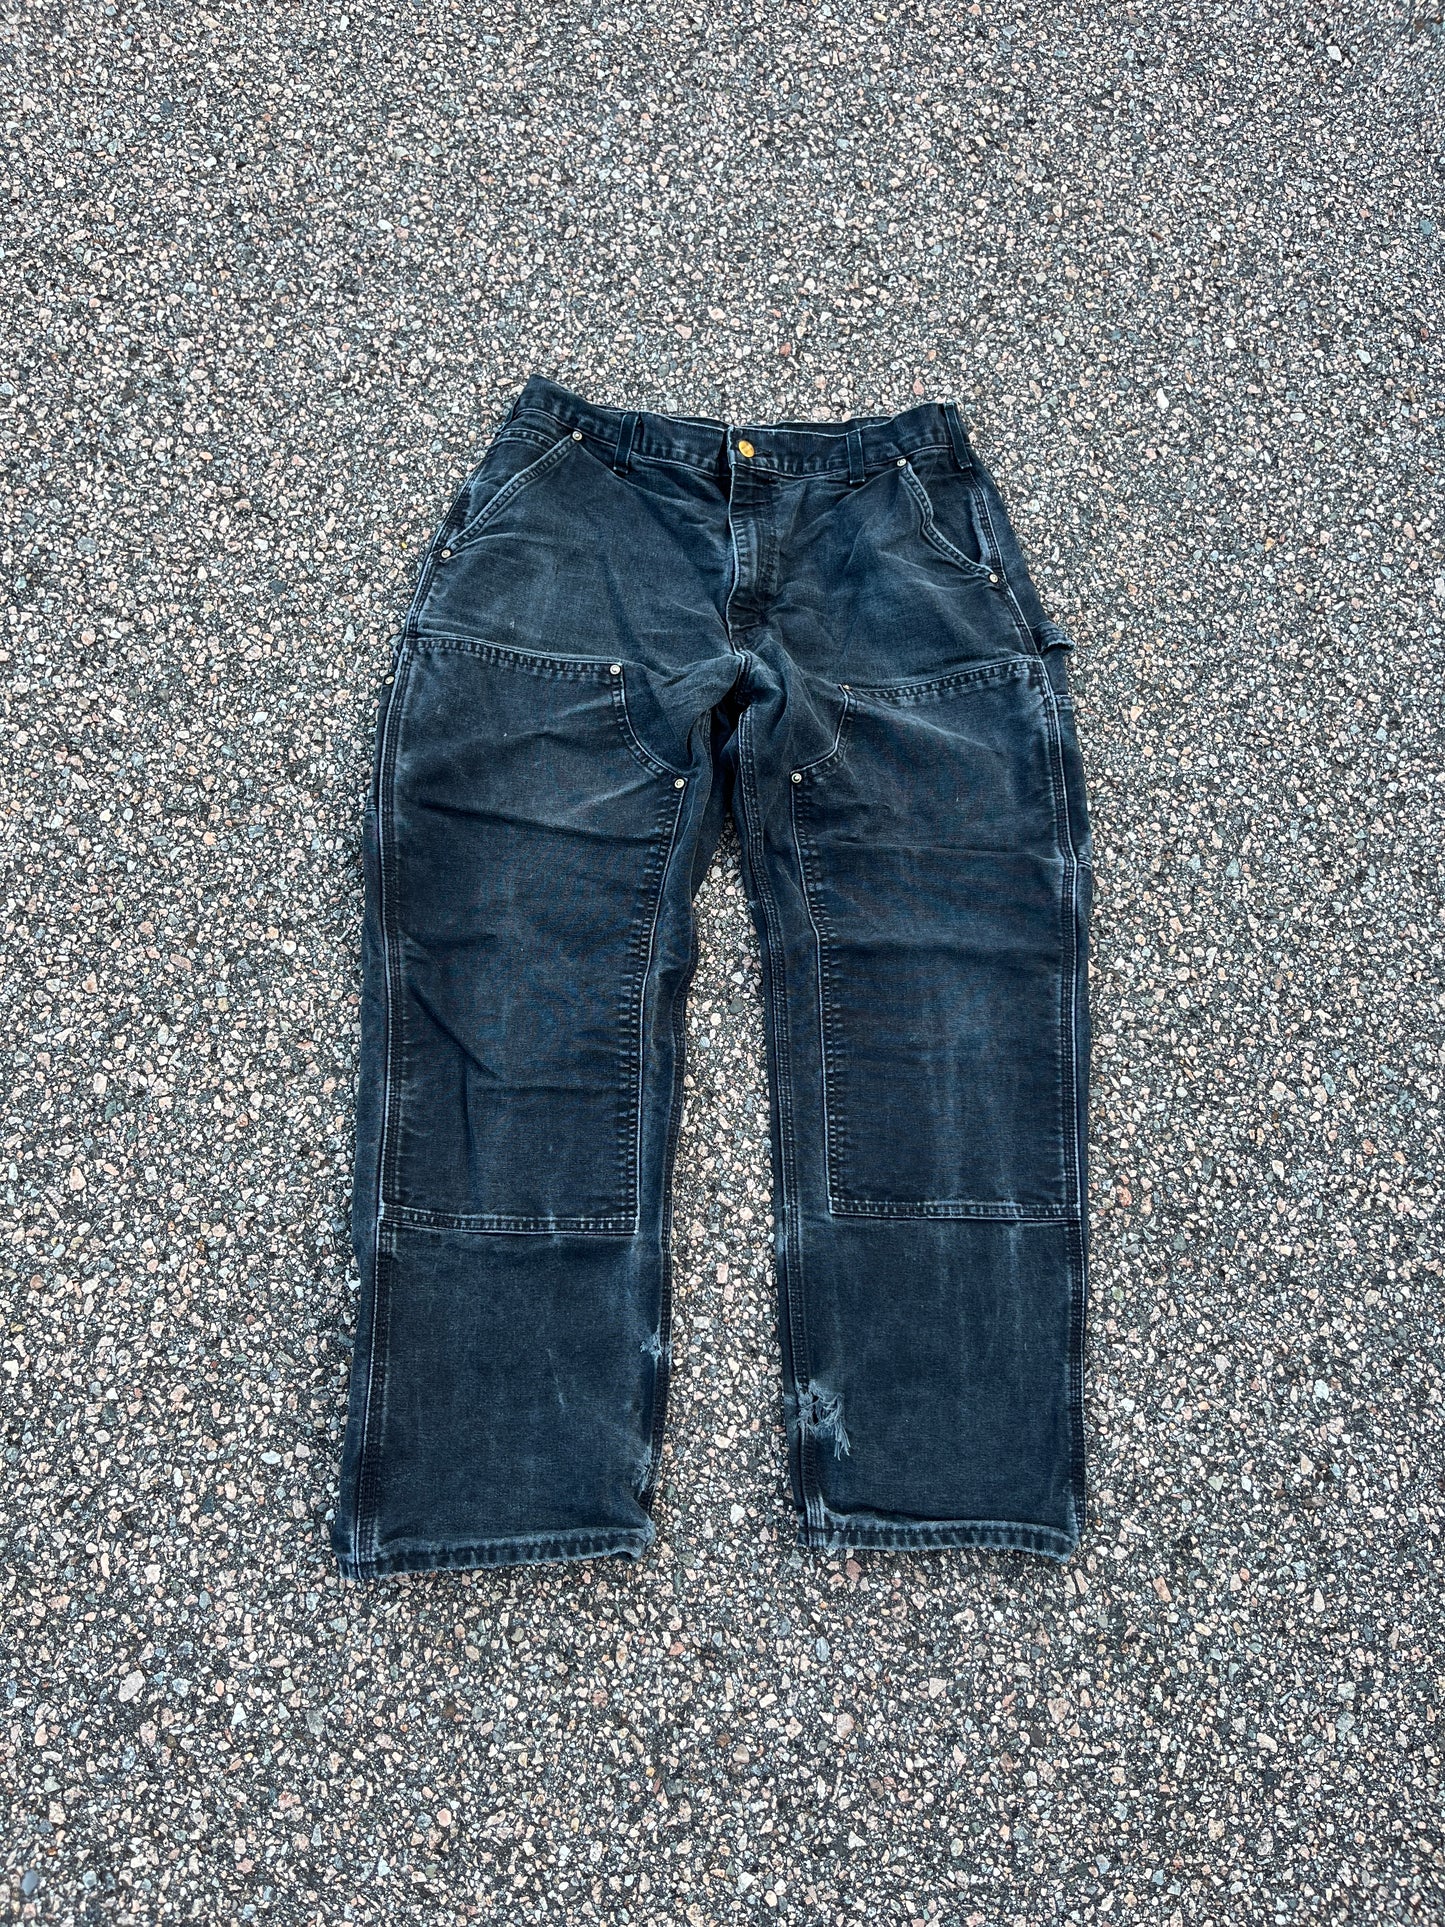 Faded Black Carhartt Double Knee Pants - 34 x 29